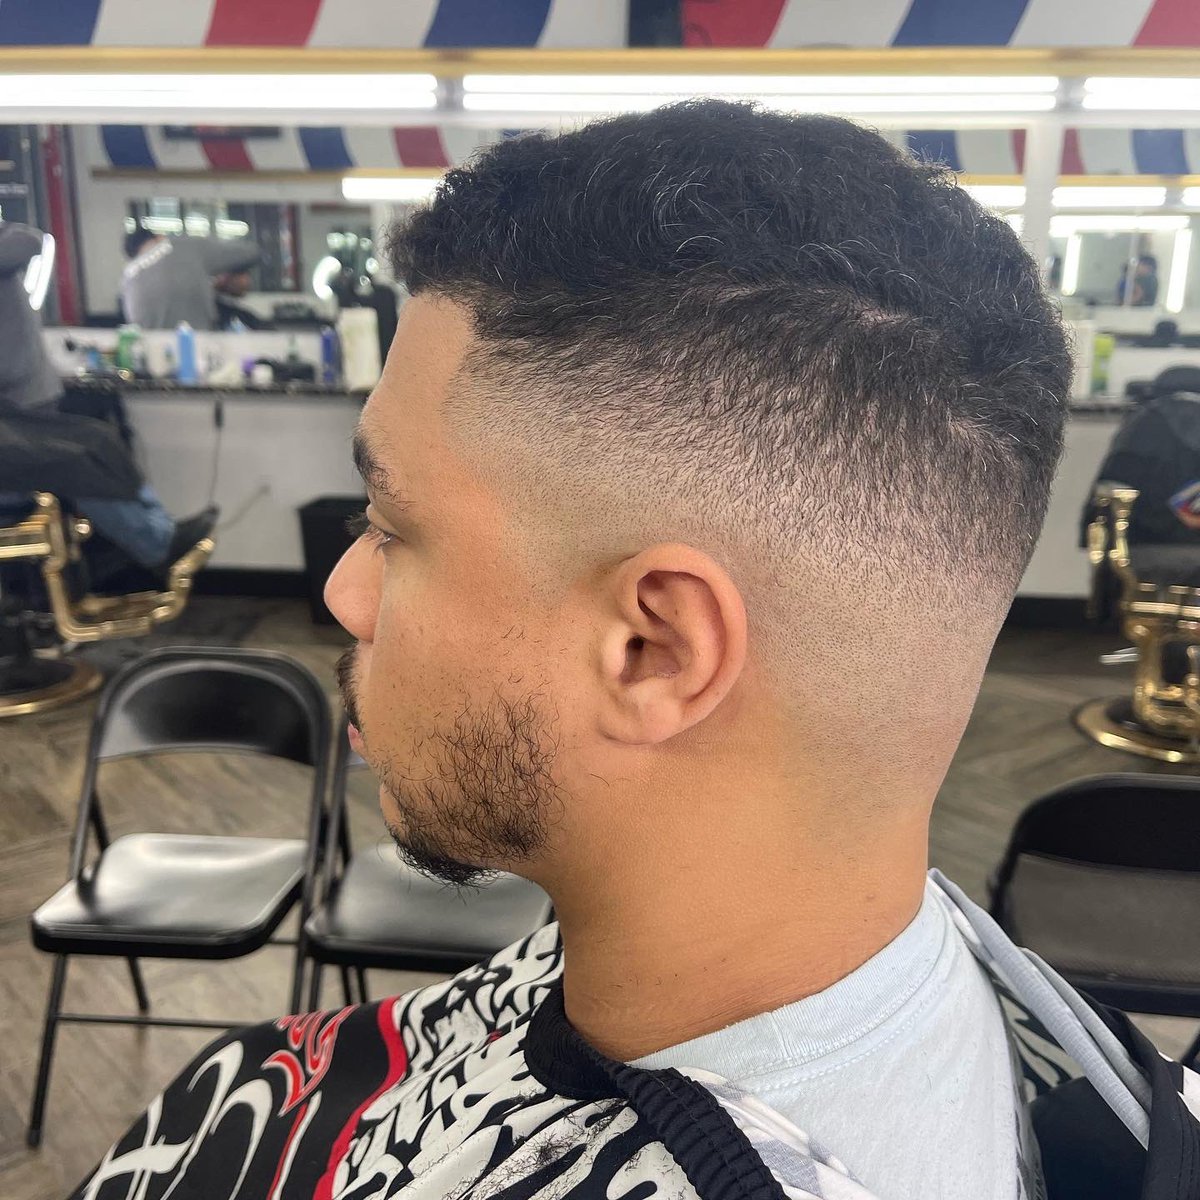 Who needs a barber #ApexLegends 

#barbershop #barber #barberlife #haircut #fade #taper #barbers #hairstyle #barberlove #barbering #beard #barbergang #barberworld #menshair #hairstyles #barbería #thebarberpost #barbernation #sharpfade #barberlifestyle #sanantonio #texasbarber